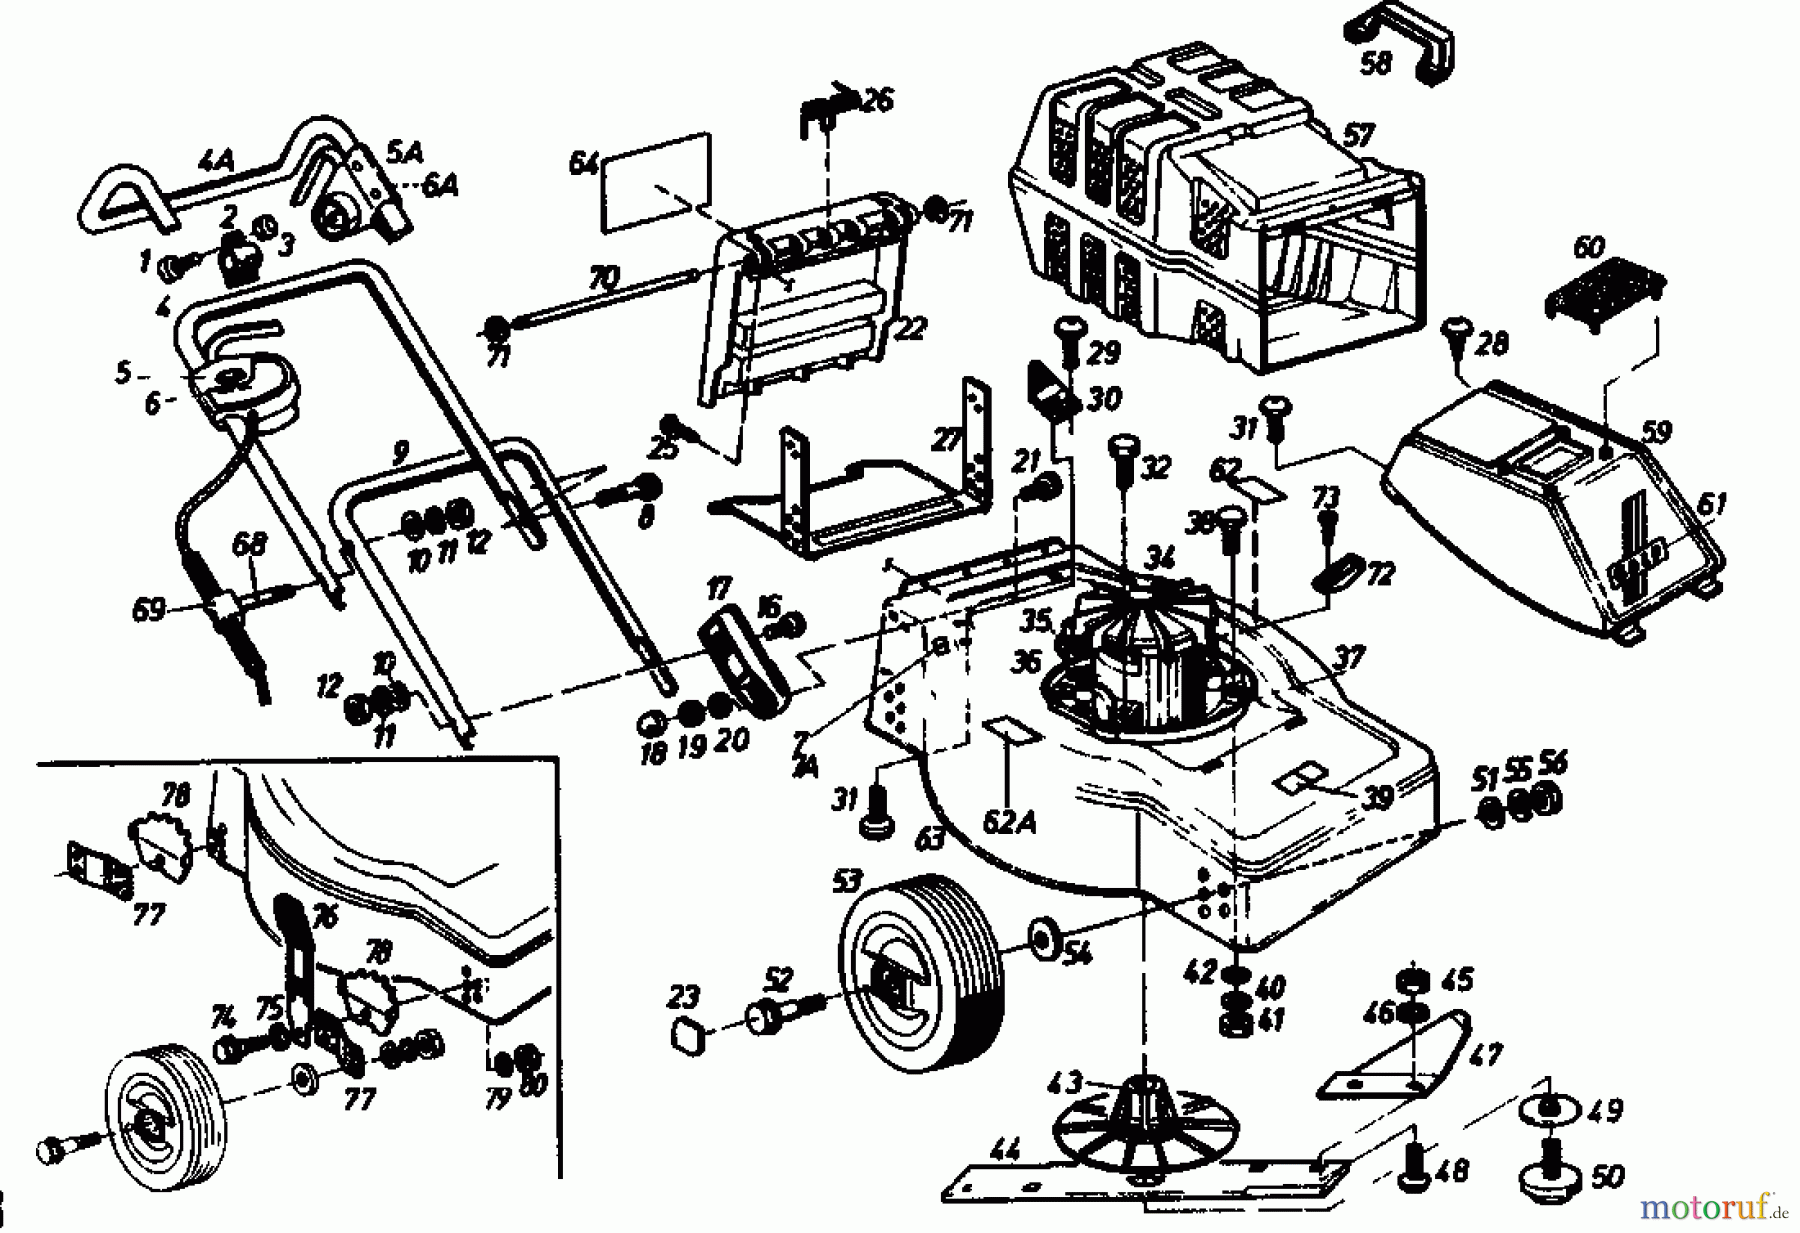  Golf Electric mower E 02881.01  (1988) Basic machine